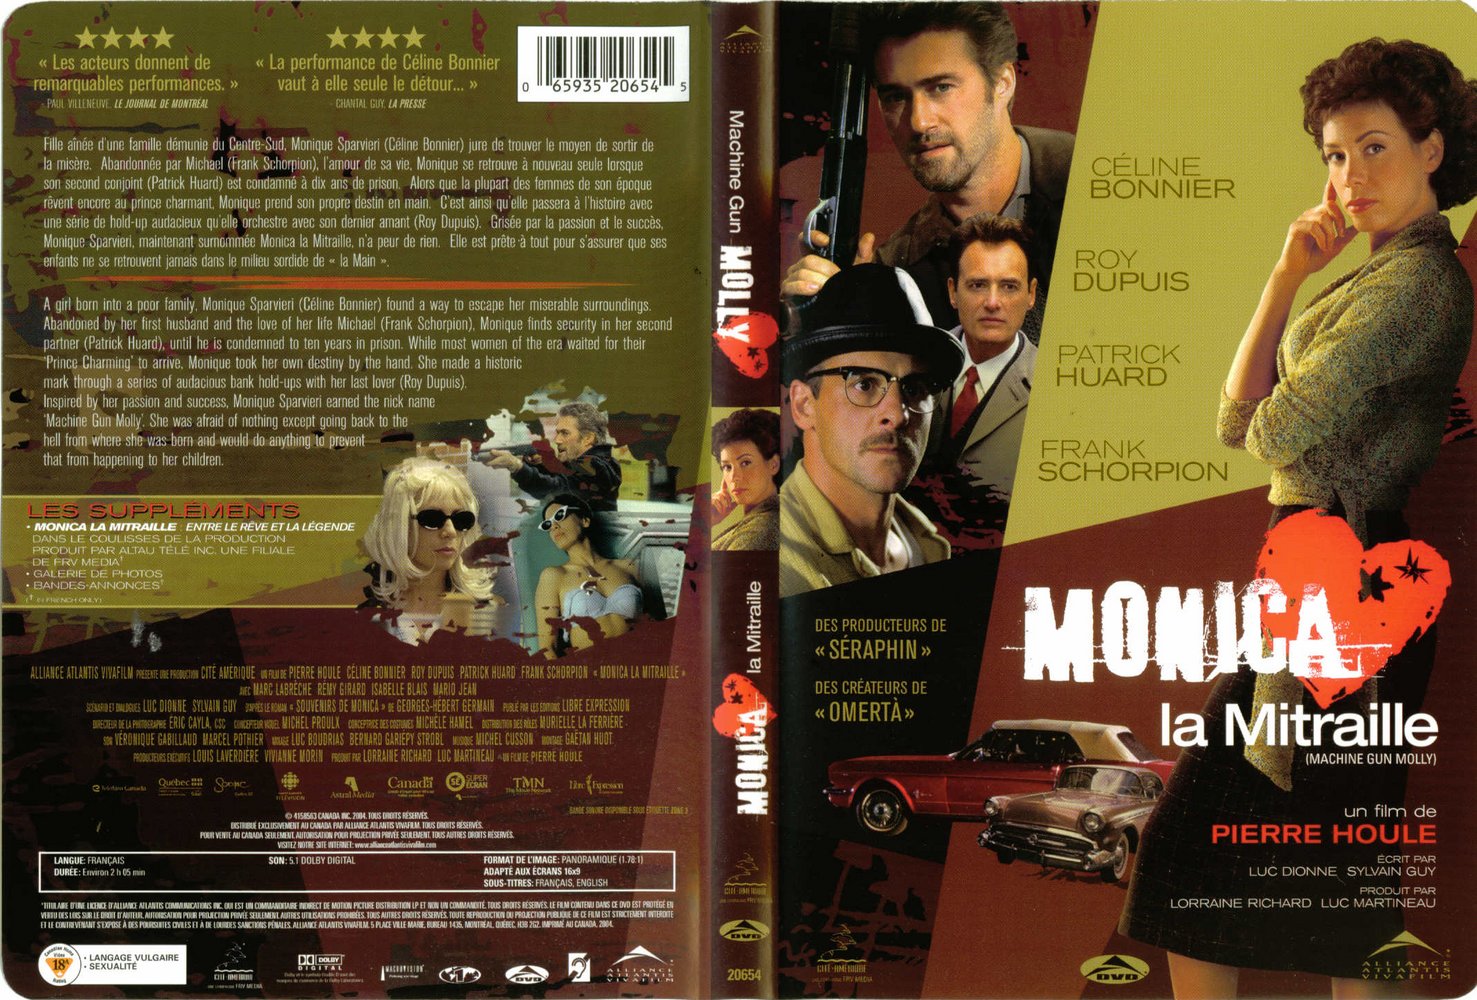 Jaquette DVD Monica la mitraille